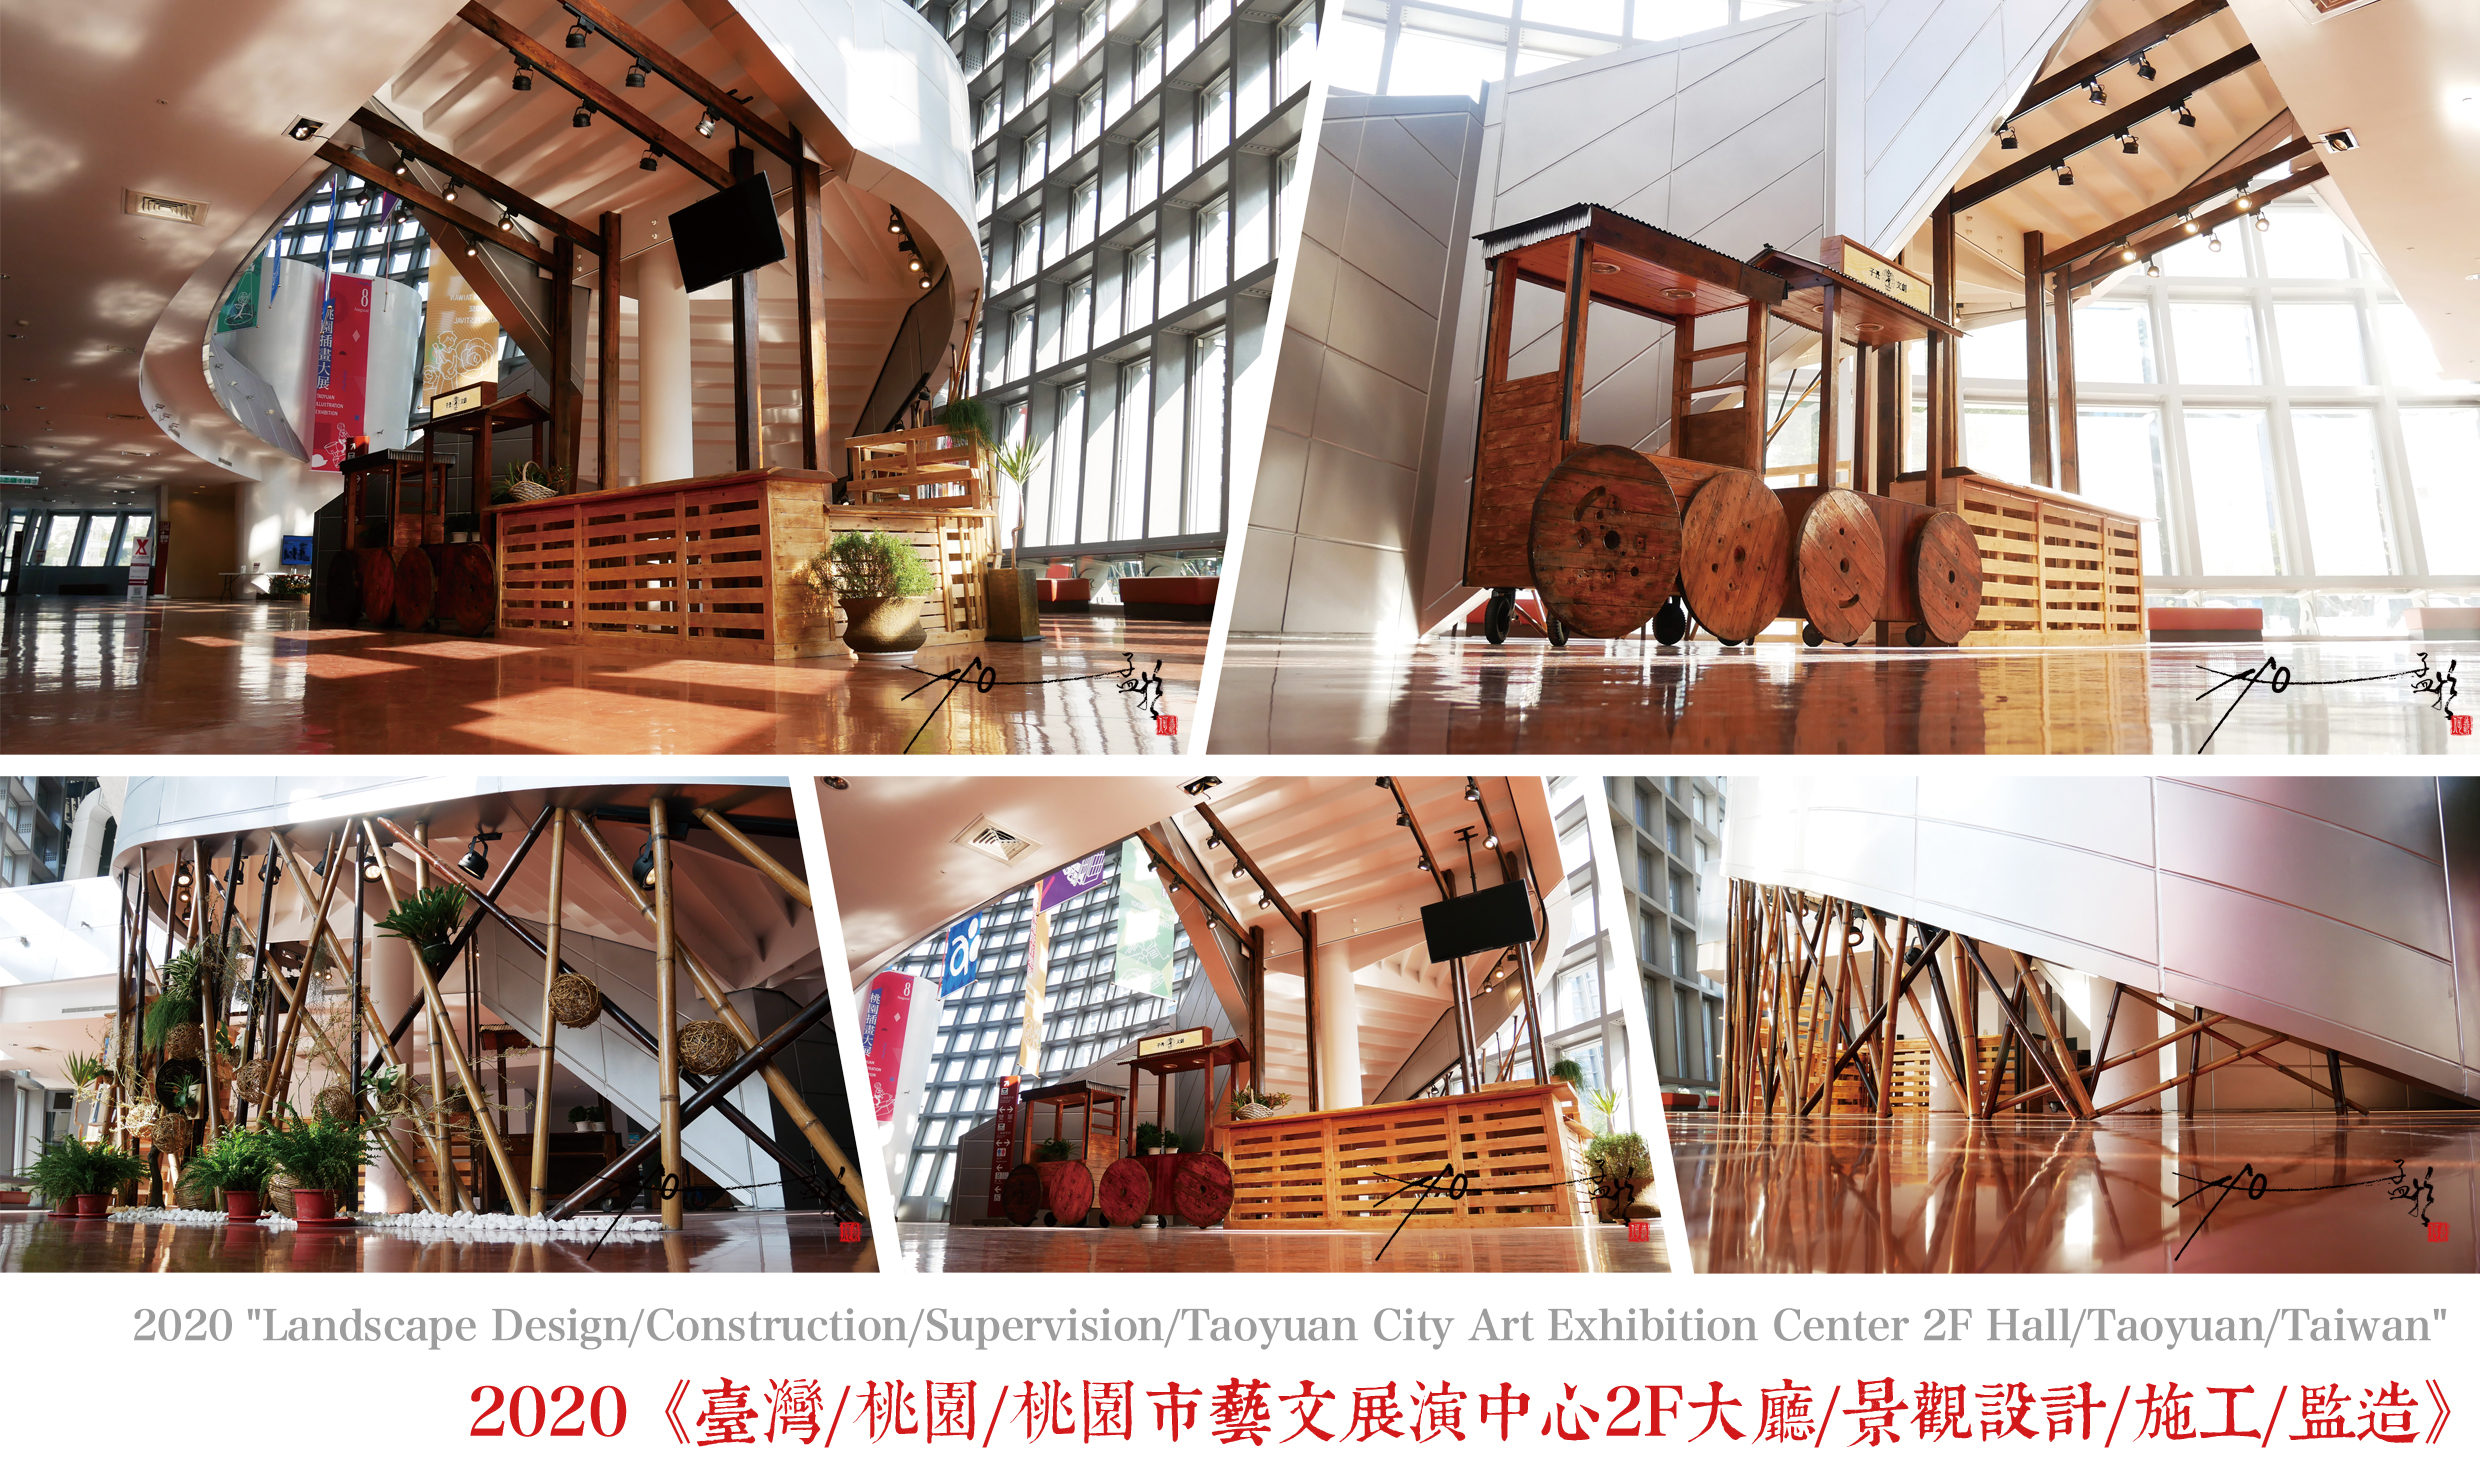 2020 "Landscape Design/Construction/Supervision/Taoyuan City Art Exhibition Center 2F Hall/Taoyuan/Taiwan"2020《臺灣/桃園/桃園市藝文展演中心2F大廳/景觀設計/施工/監造》【Just Jump Culture all rights reserved子丑文創/版權所有】